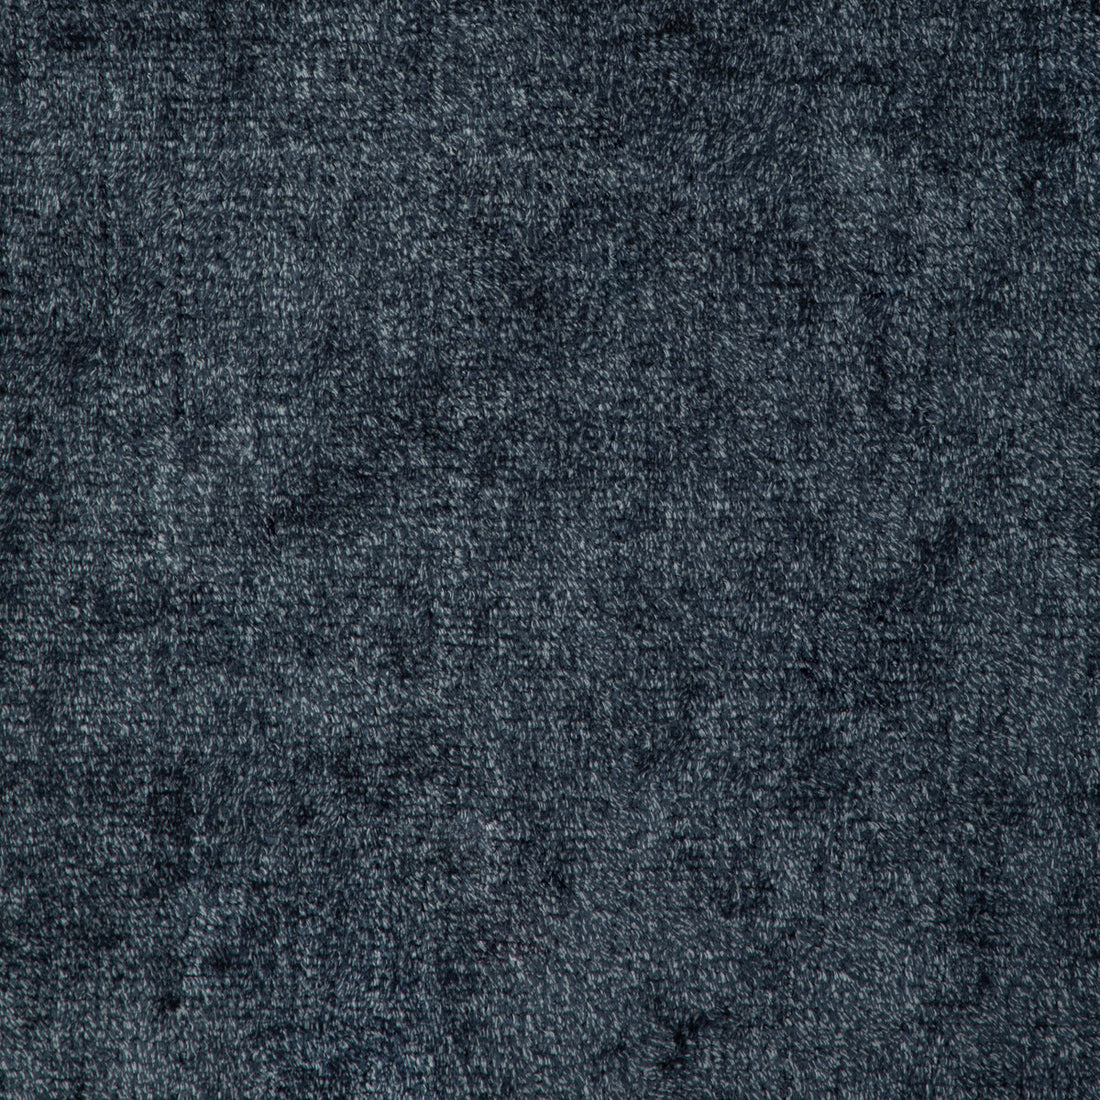 Kravet Smart fabric in 36995-51 color - pattern 36995.51.0 - by Kravet Smart